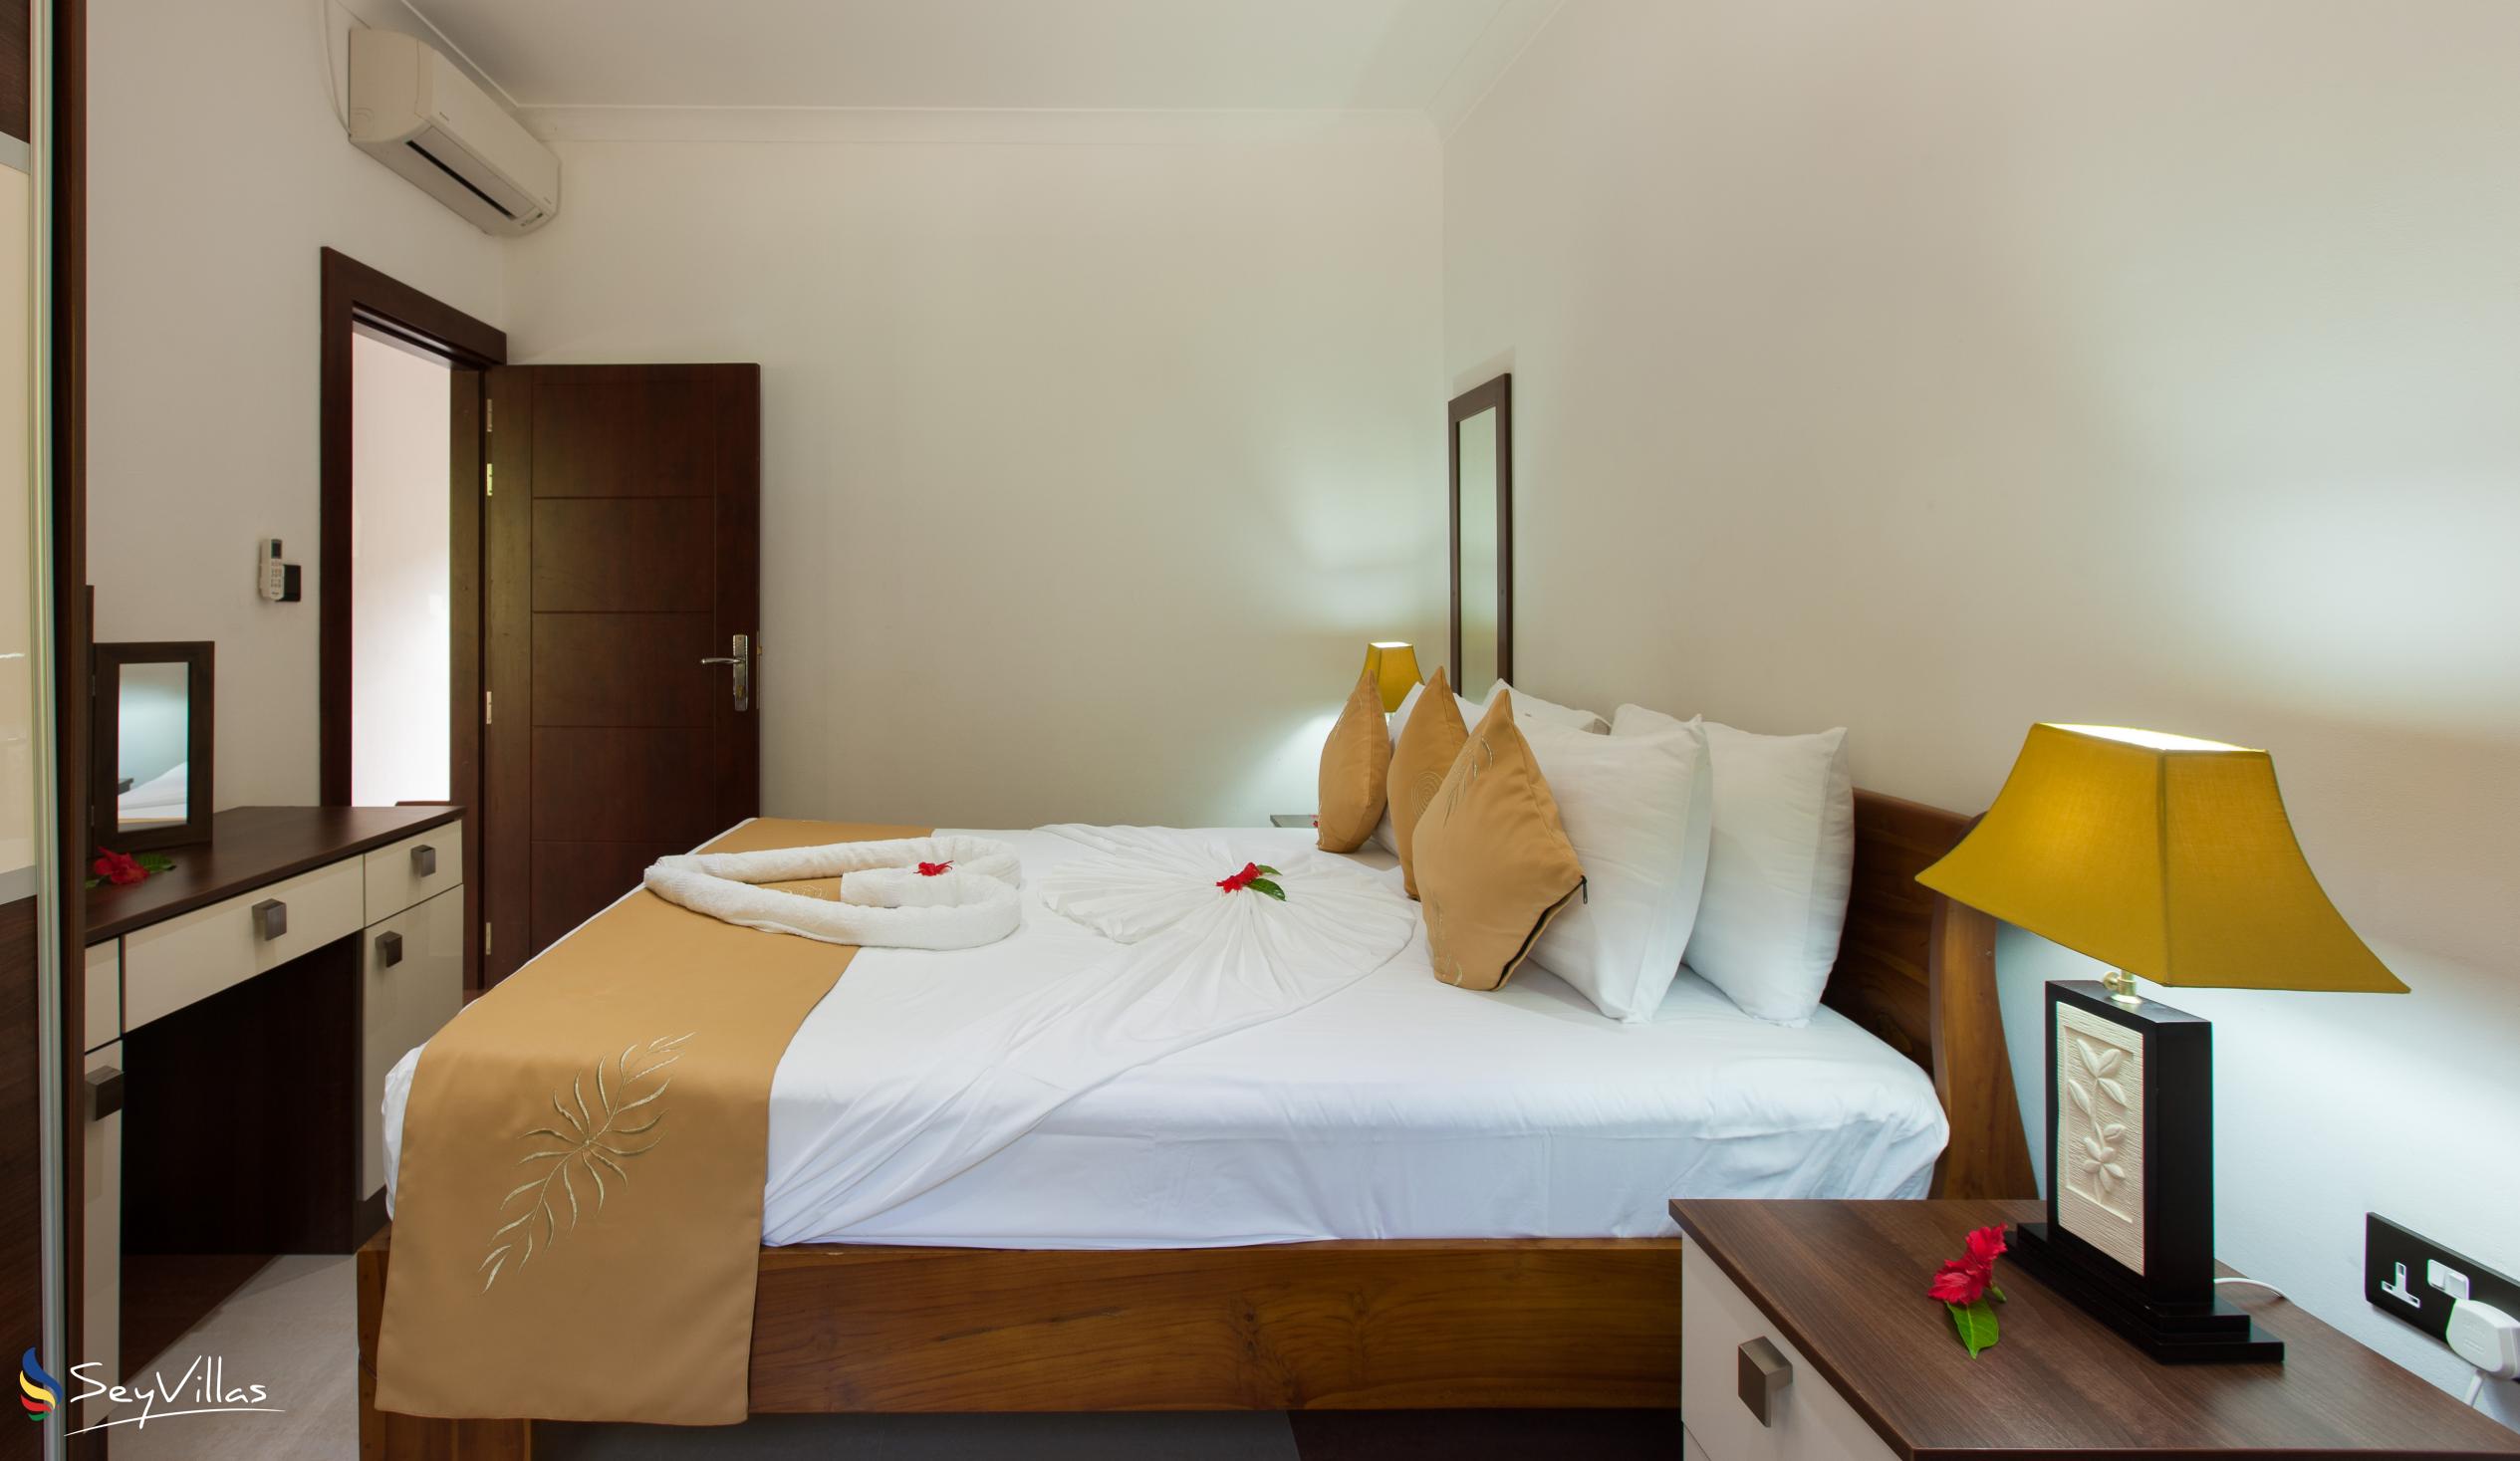 Photo 102: YASAD Luxury Beach Residence - 3-Bedroom Apartment First Floor - Praslin (Seychelles)